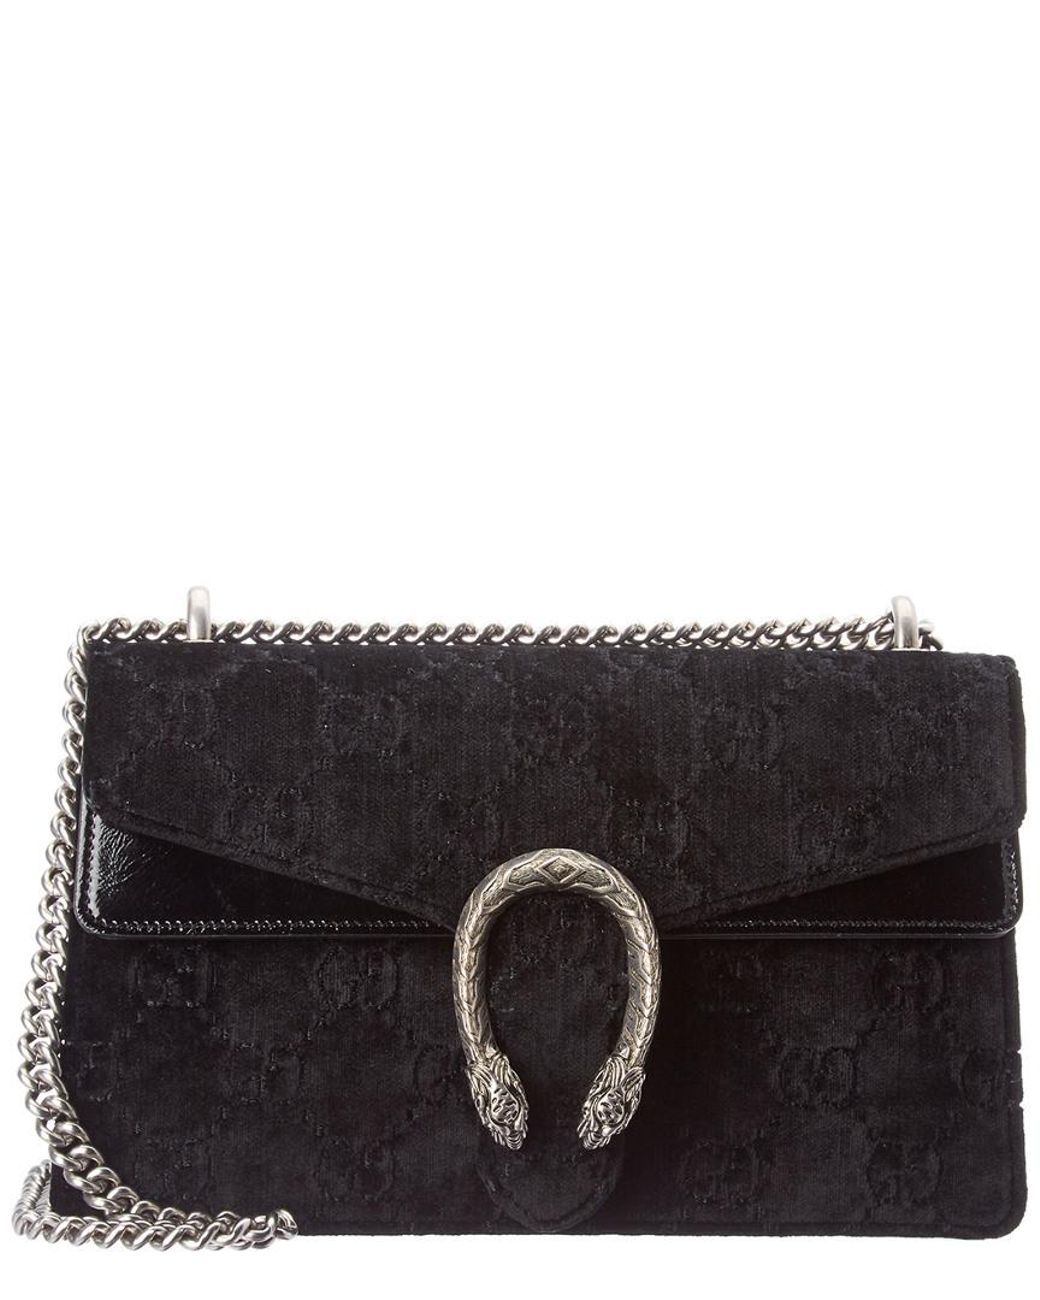 Gucci Dionysus Python Top Handle Bag in Black | Lyst